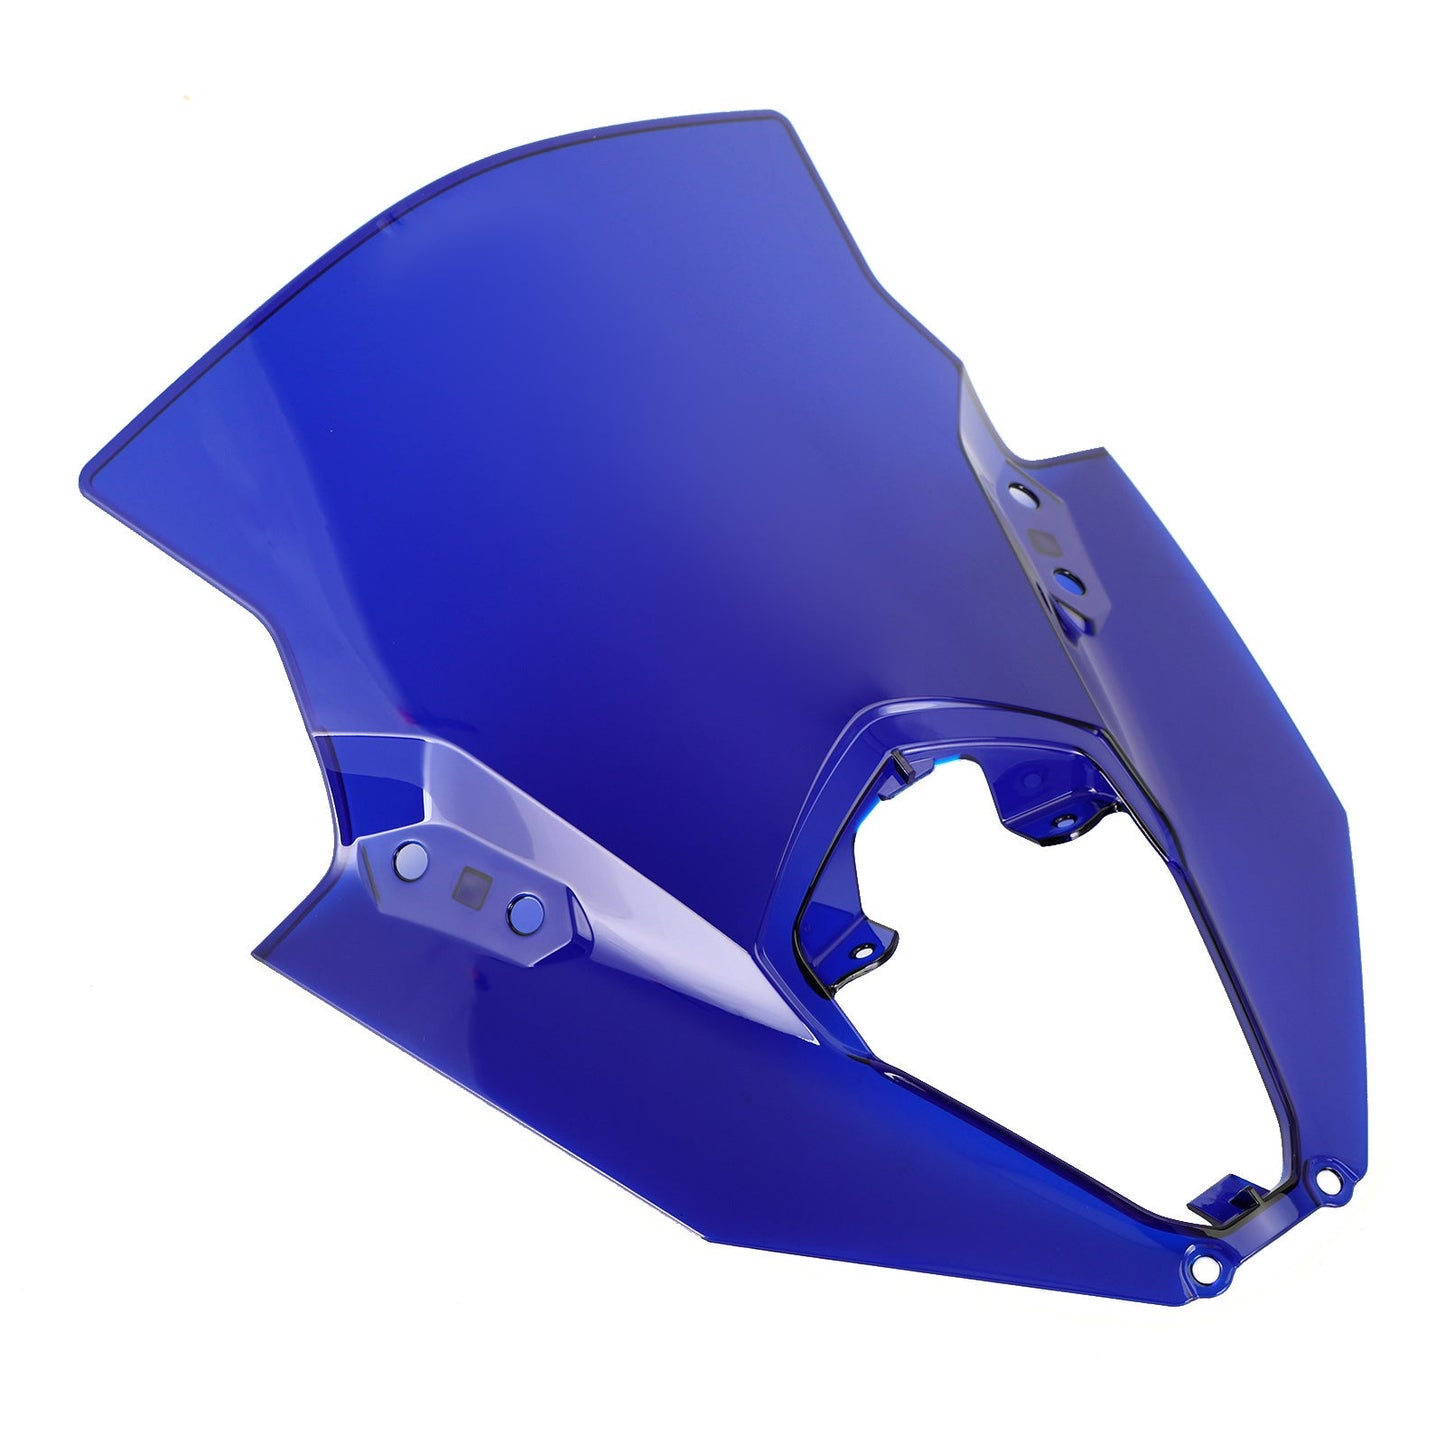 Windshield Windscreen Protector for Kawasaki NINJA 650 ER6F 2020-2022 Black